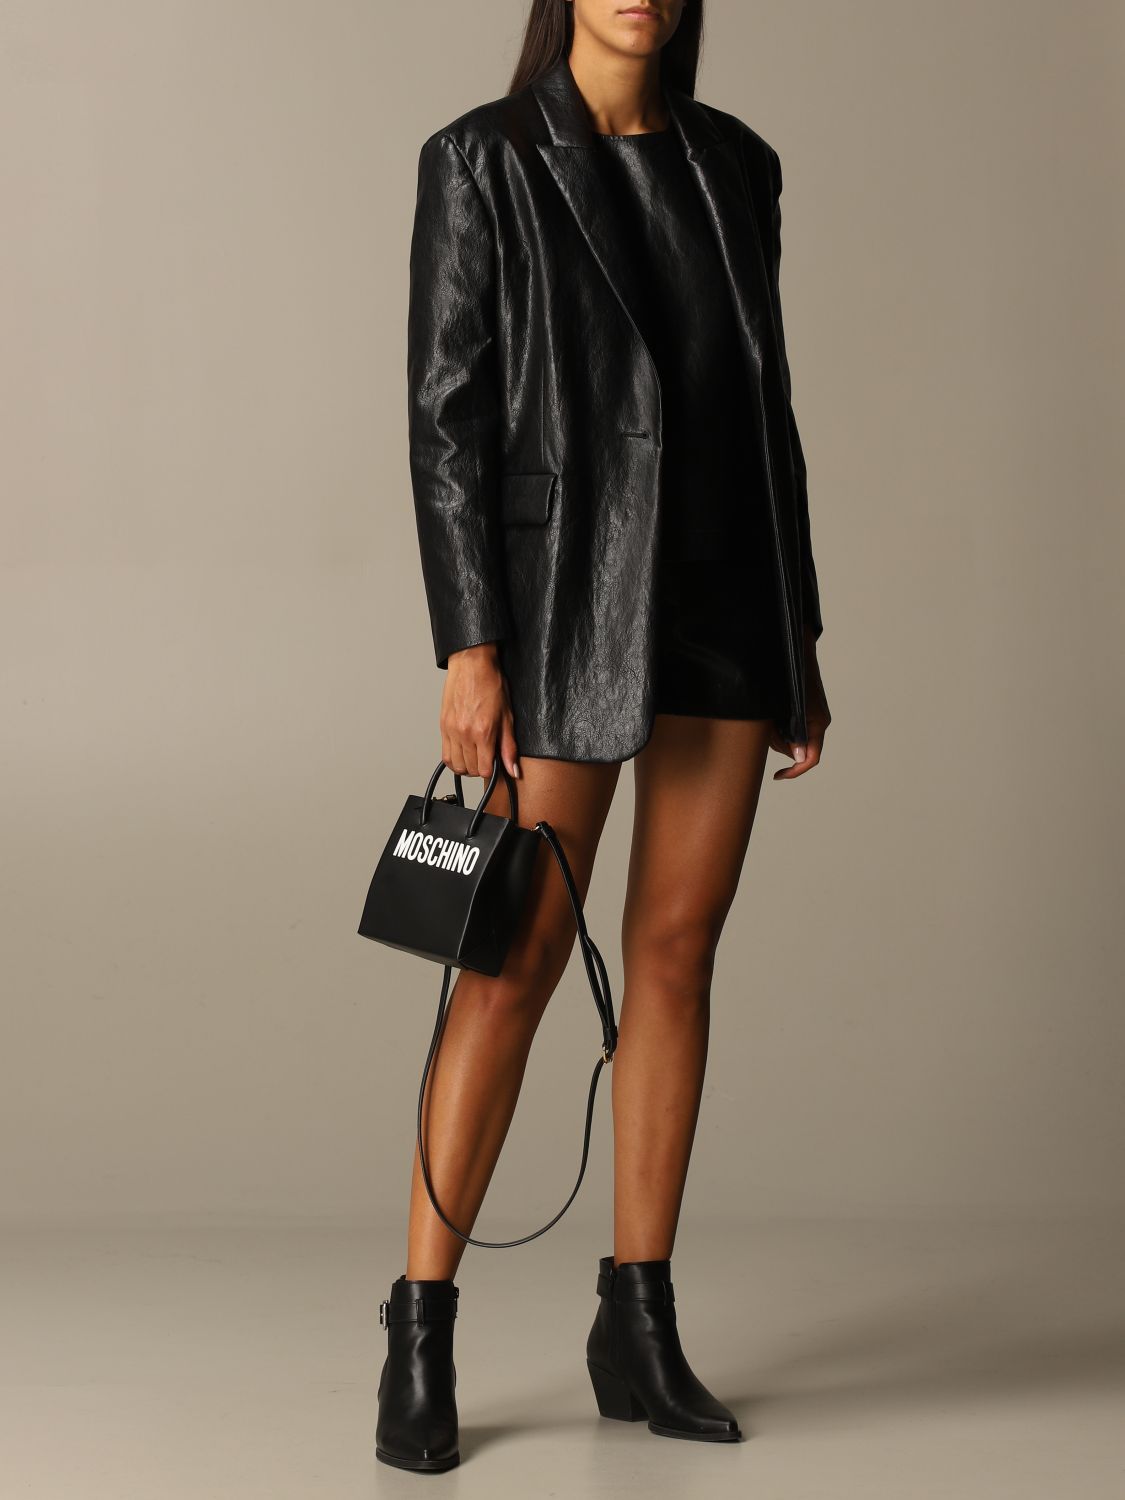 MOSCHINO COUTURE: Bolso tote para mujer, Negro | Bolso Tote Moschino Couture 7416 8001 en línea GIGLIO.COM